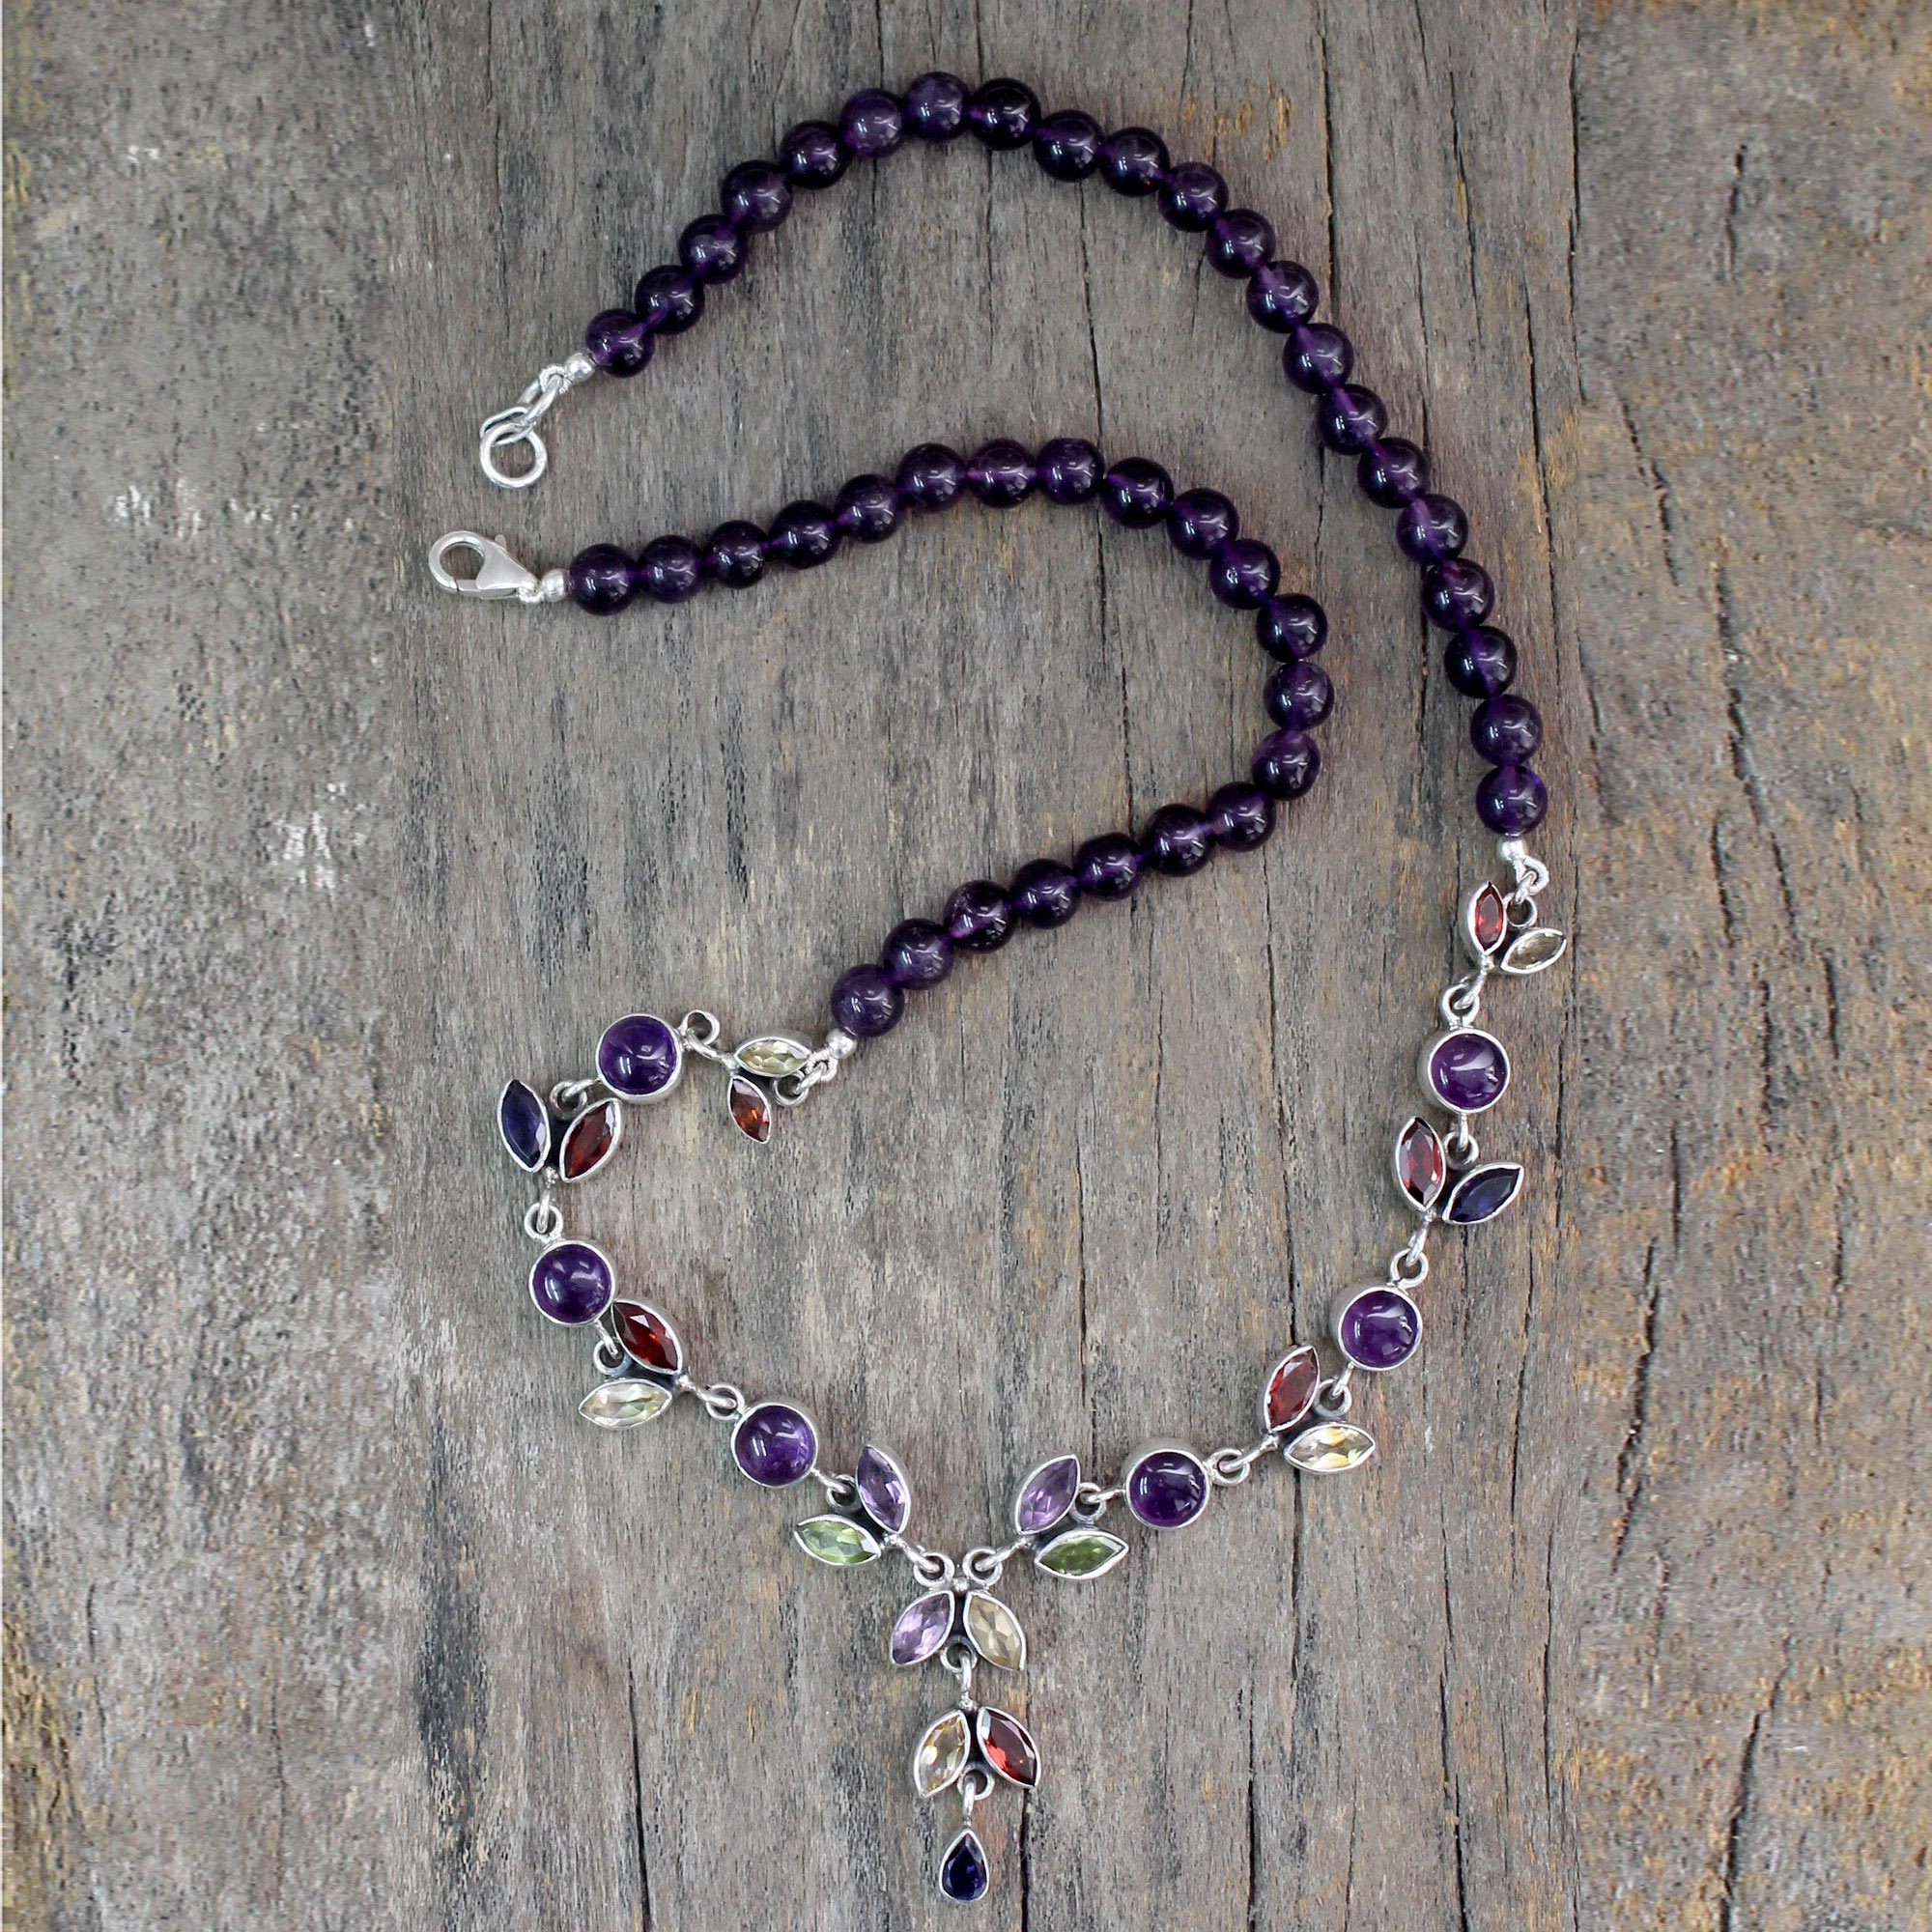 Floral Y Necklace Multigemstone Jewelry from India - Wild Feminine | NOVICA